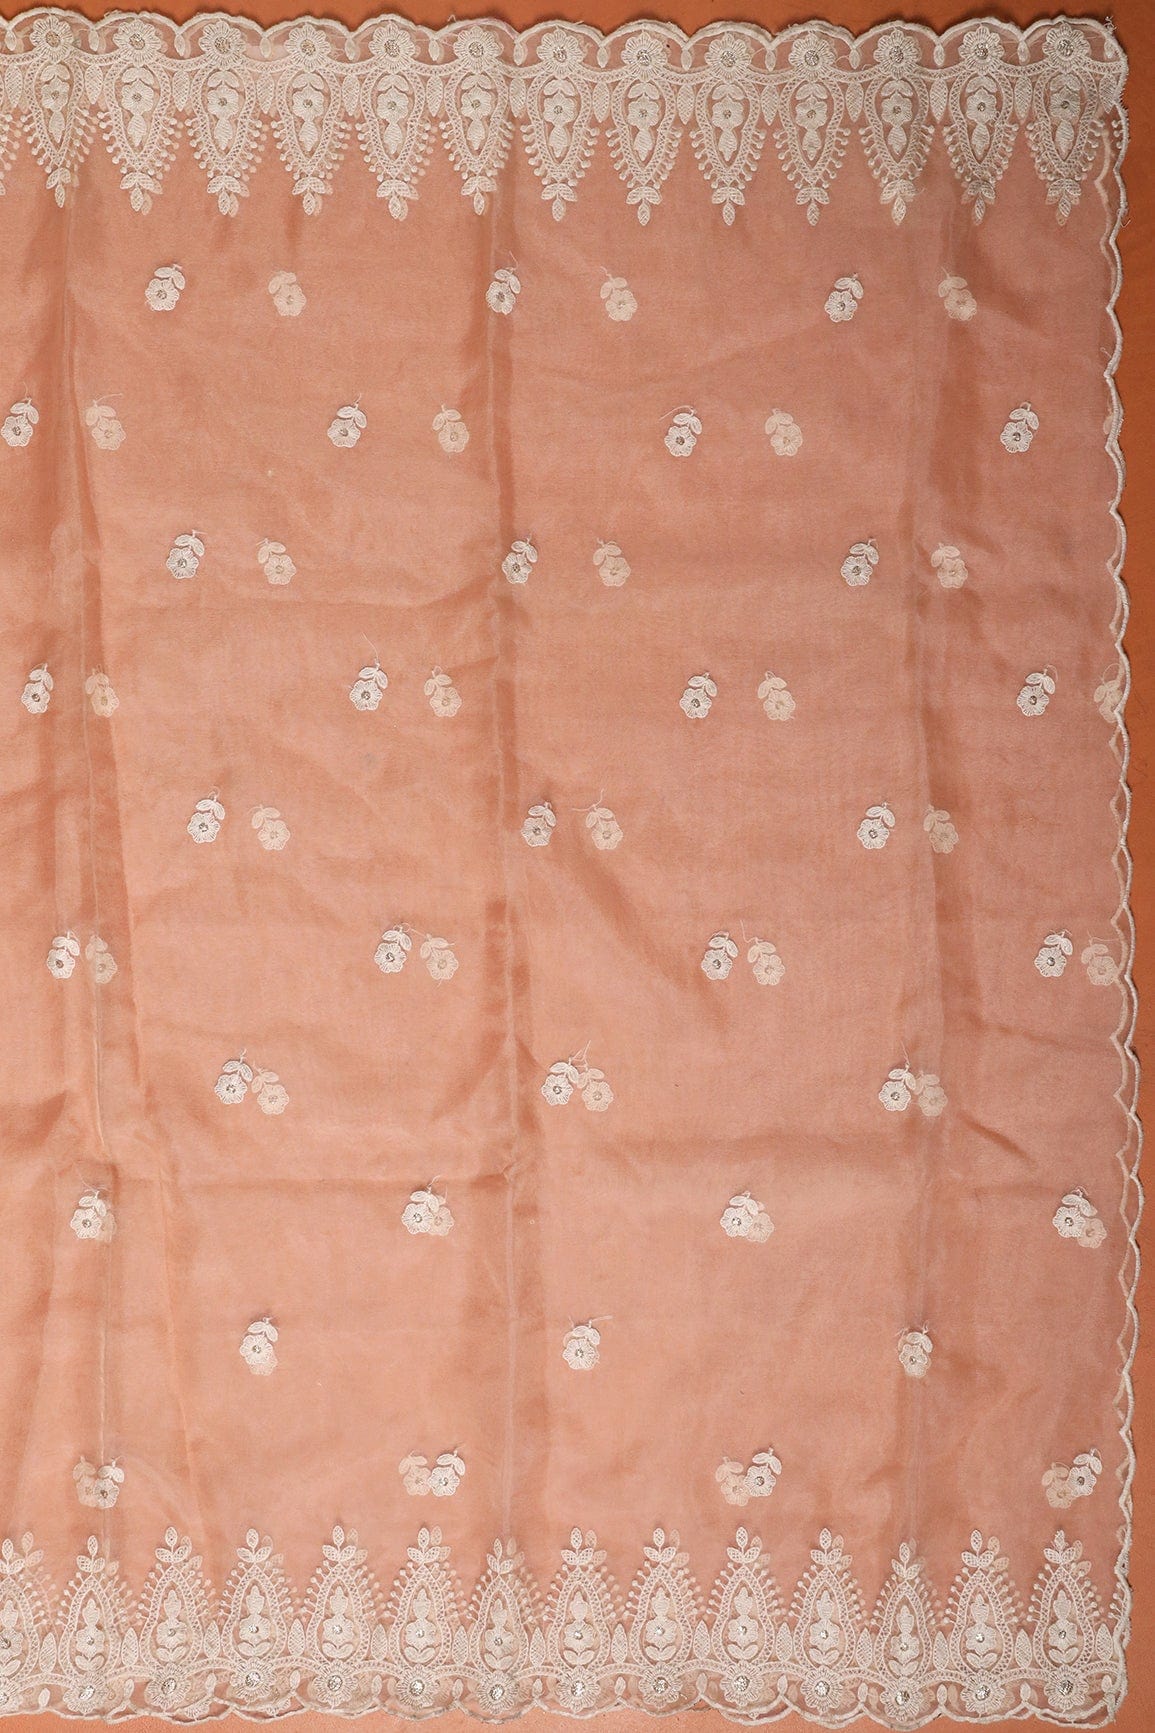 doeraa Dupatta White Thread With Gold Zari Floral Lucknowi Embroidery Work On Peach Organza Dupatta With Border